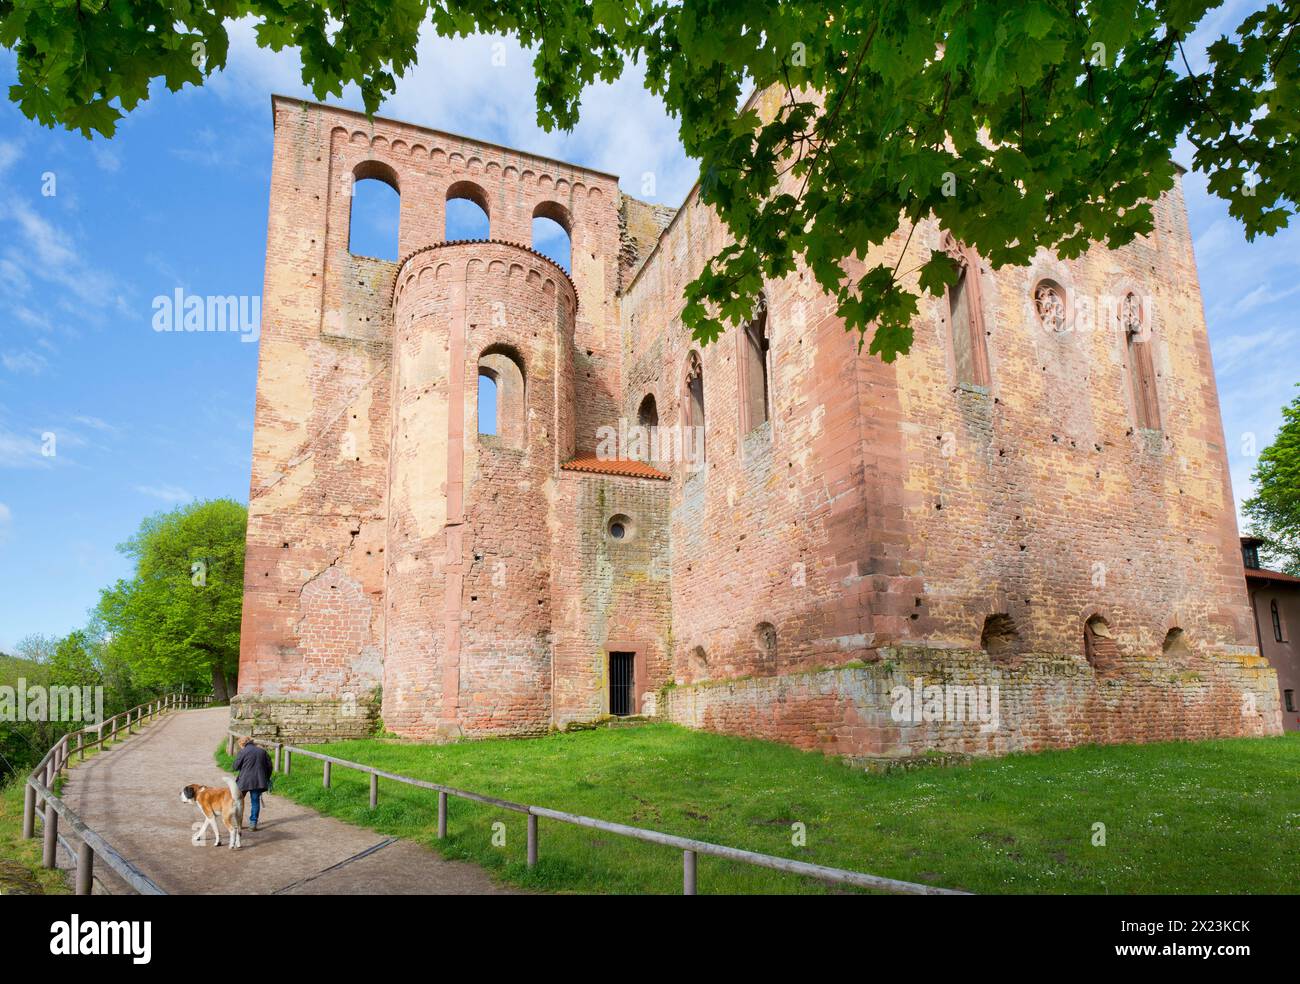 The Limburg monastery ruins in Bad Dürkheim, Rhineland-Palatinate, Germany Stock Photo